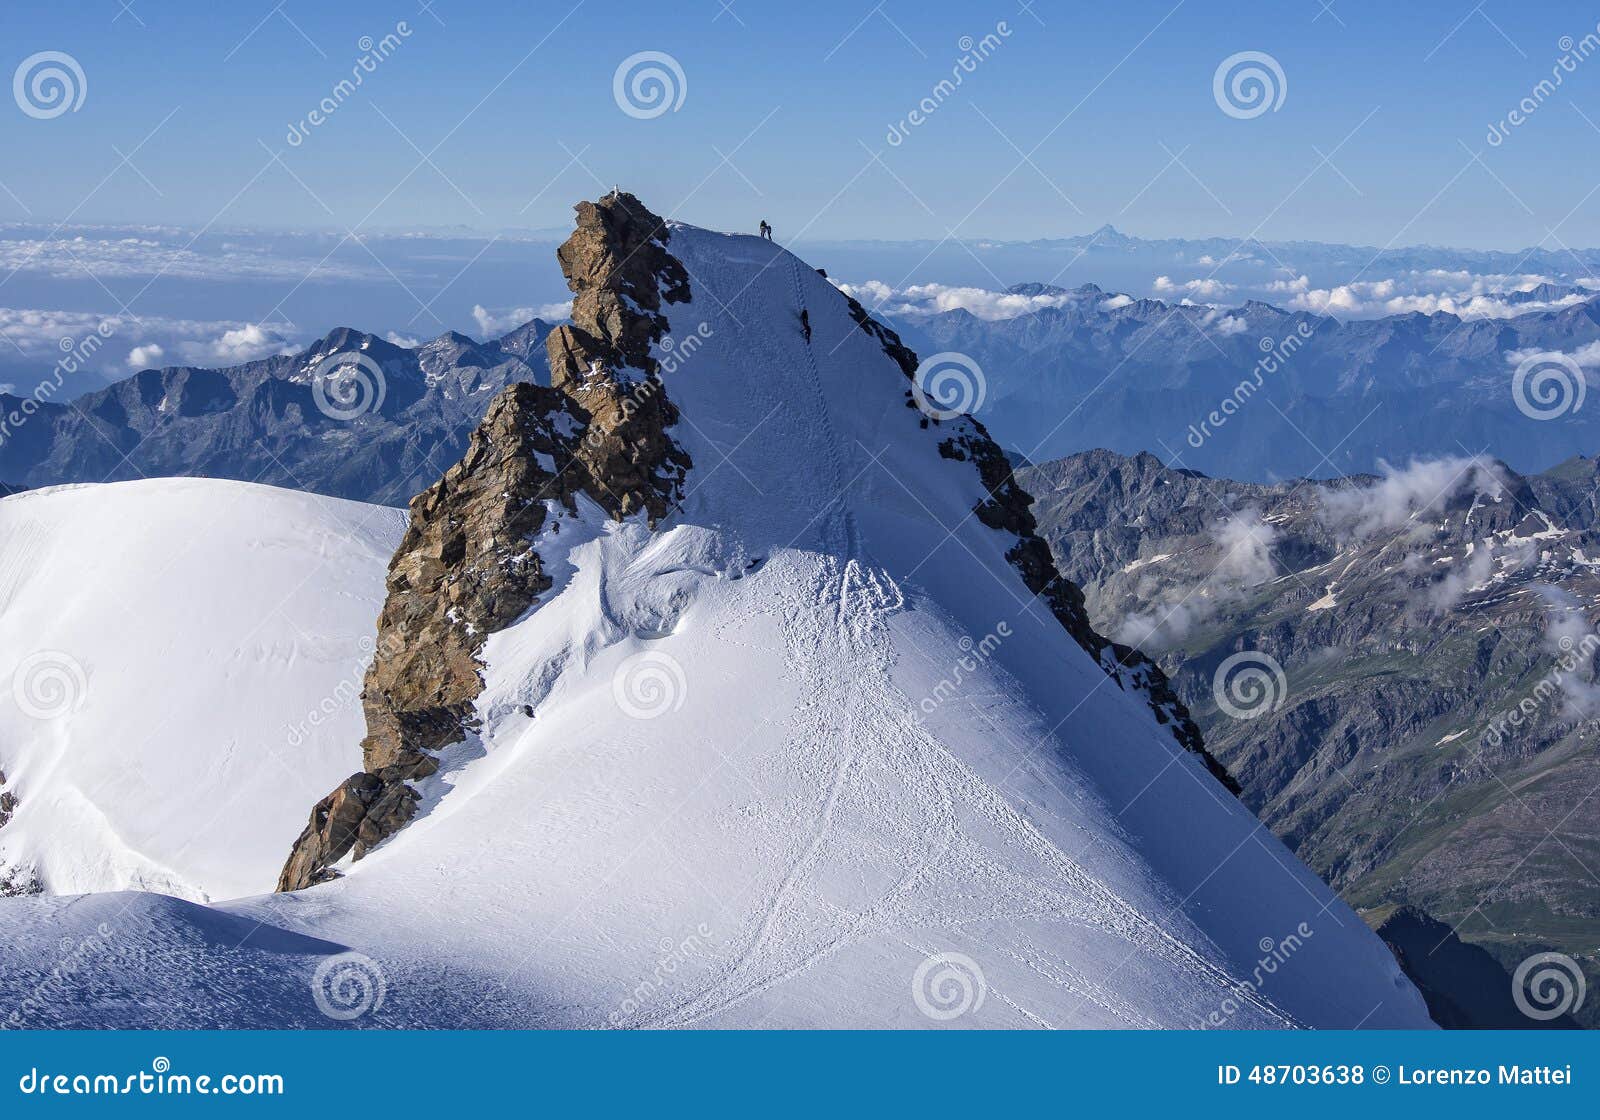 climbers on corno nero peak, monte rosa, alps, italy